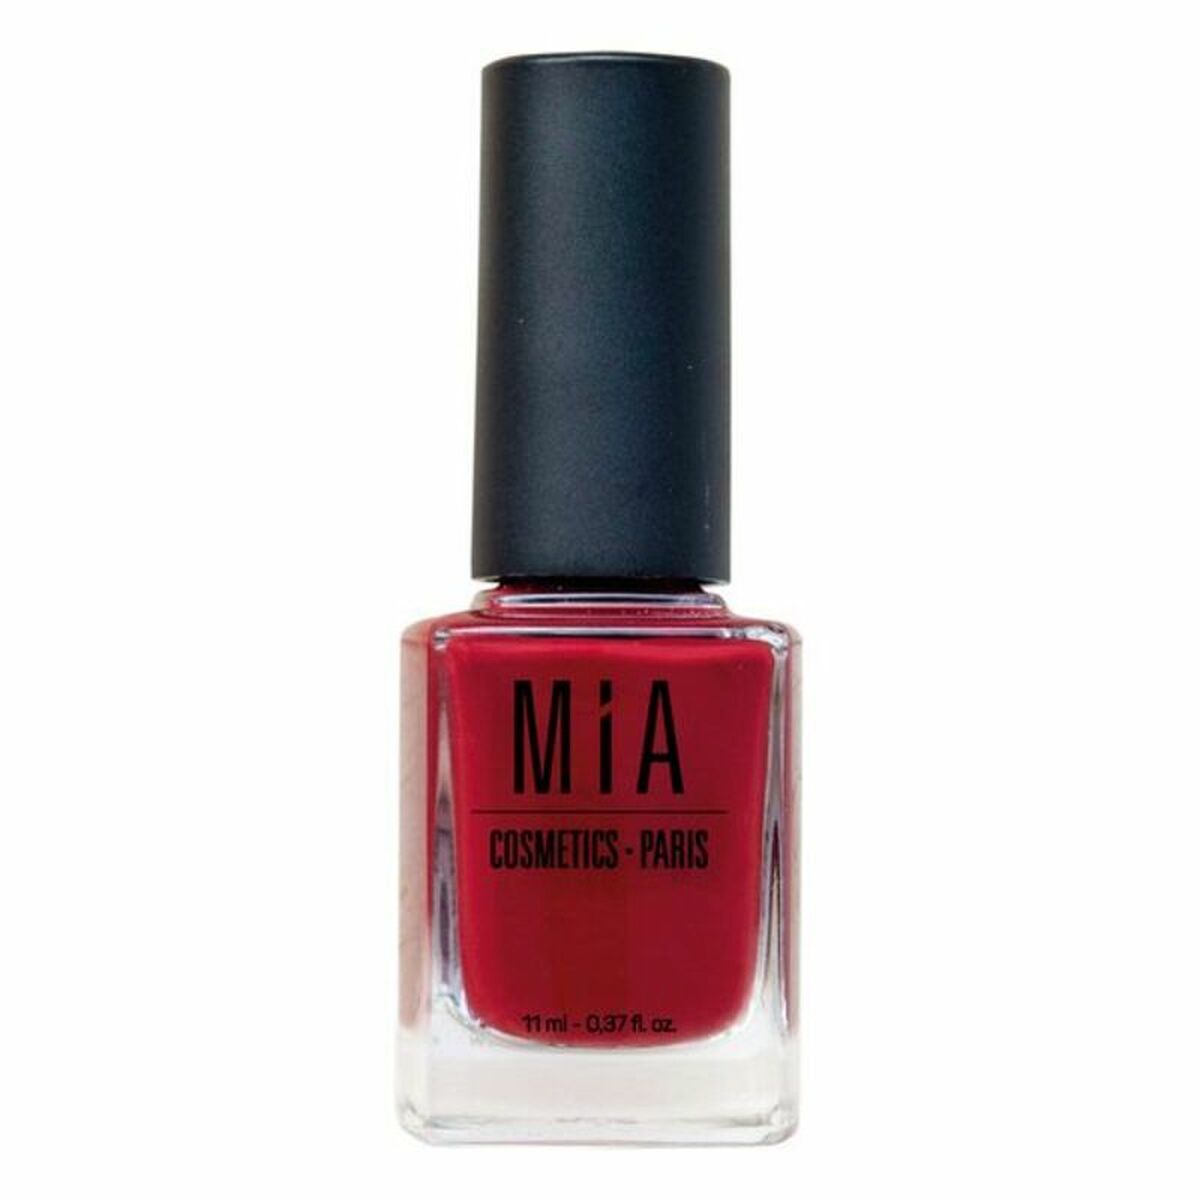 Nail polish Mia Cosmetics Paris Garnet (11 ml) - Calm Beauty IE